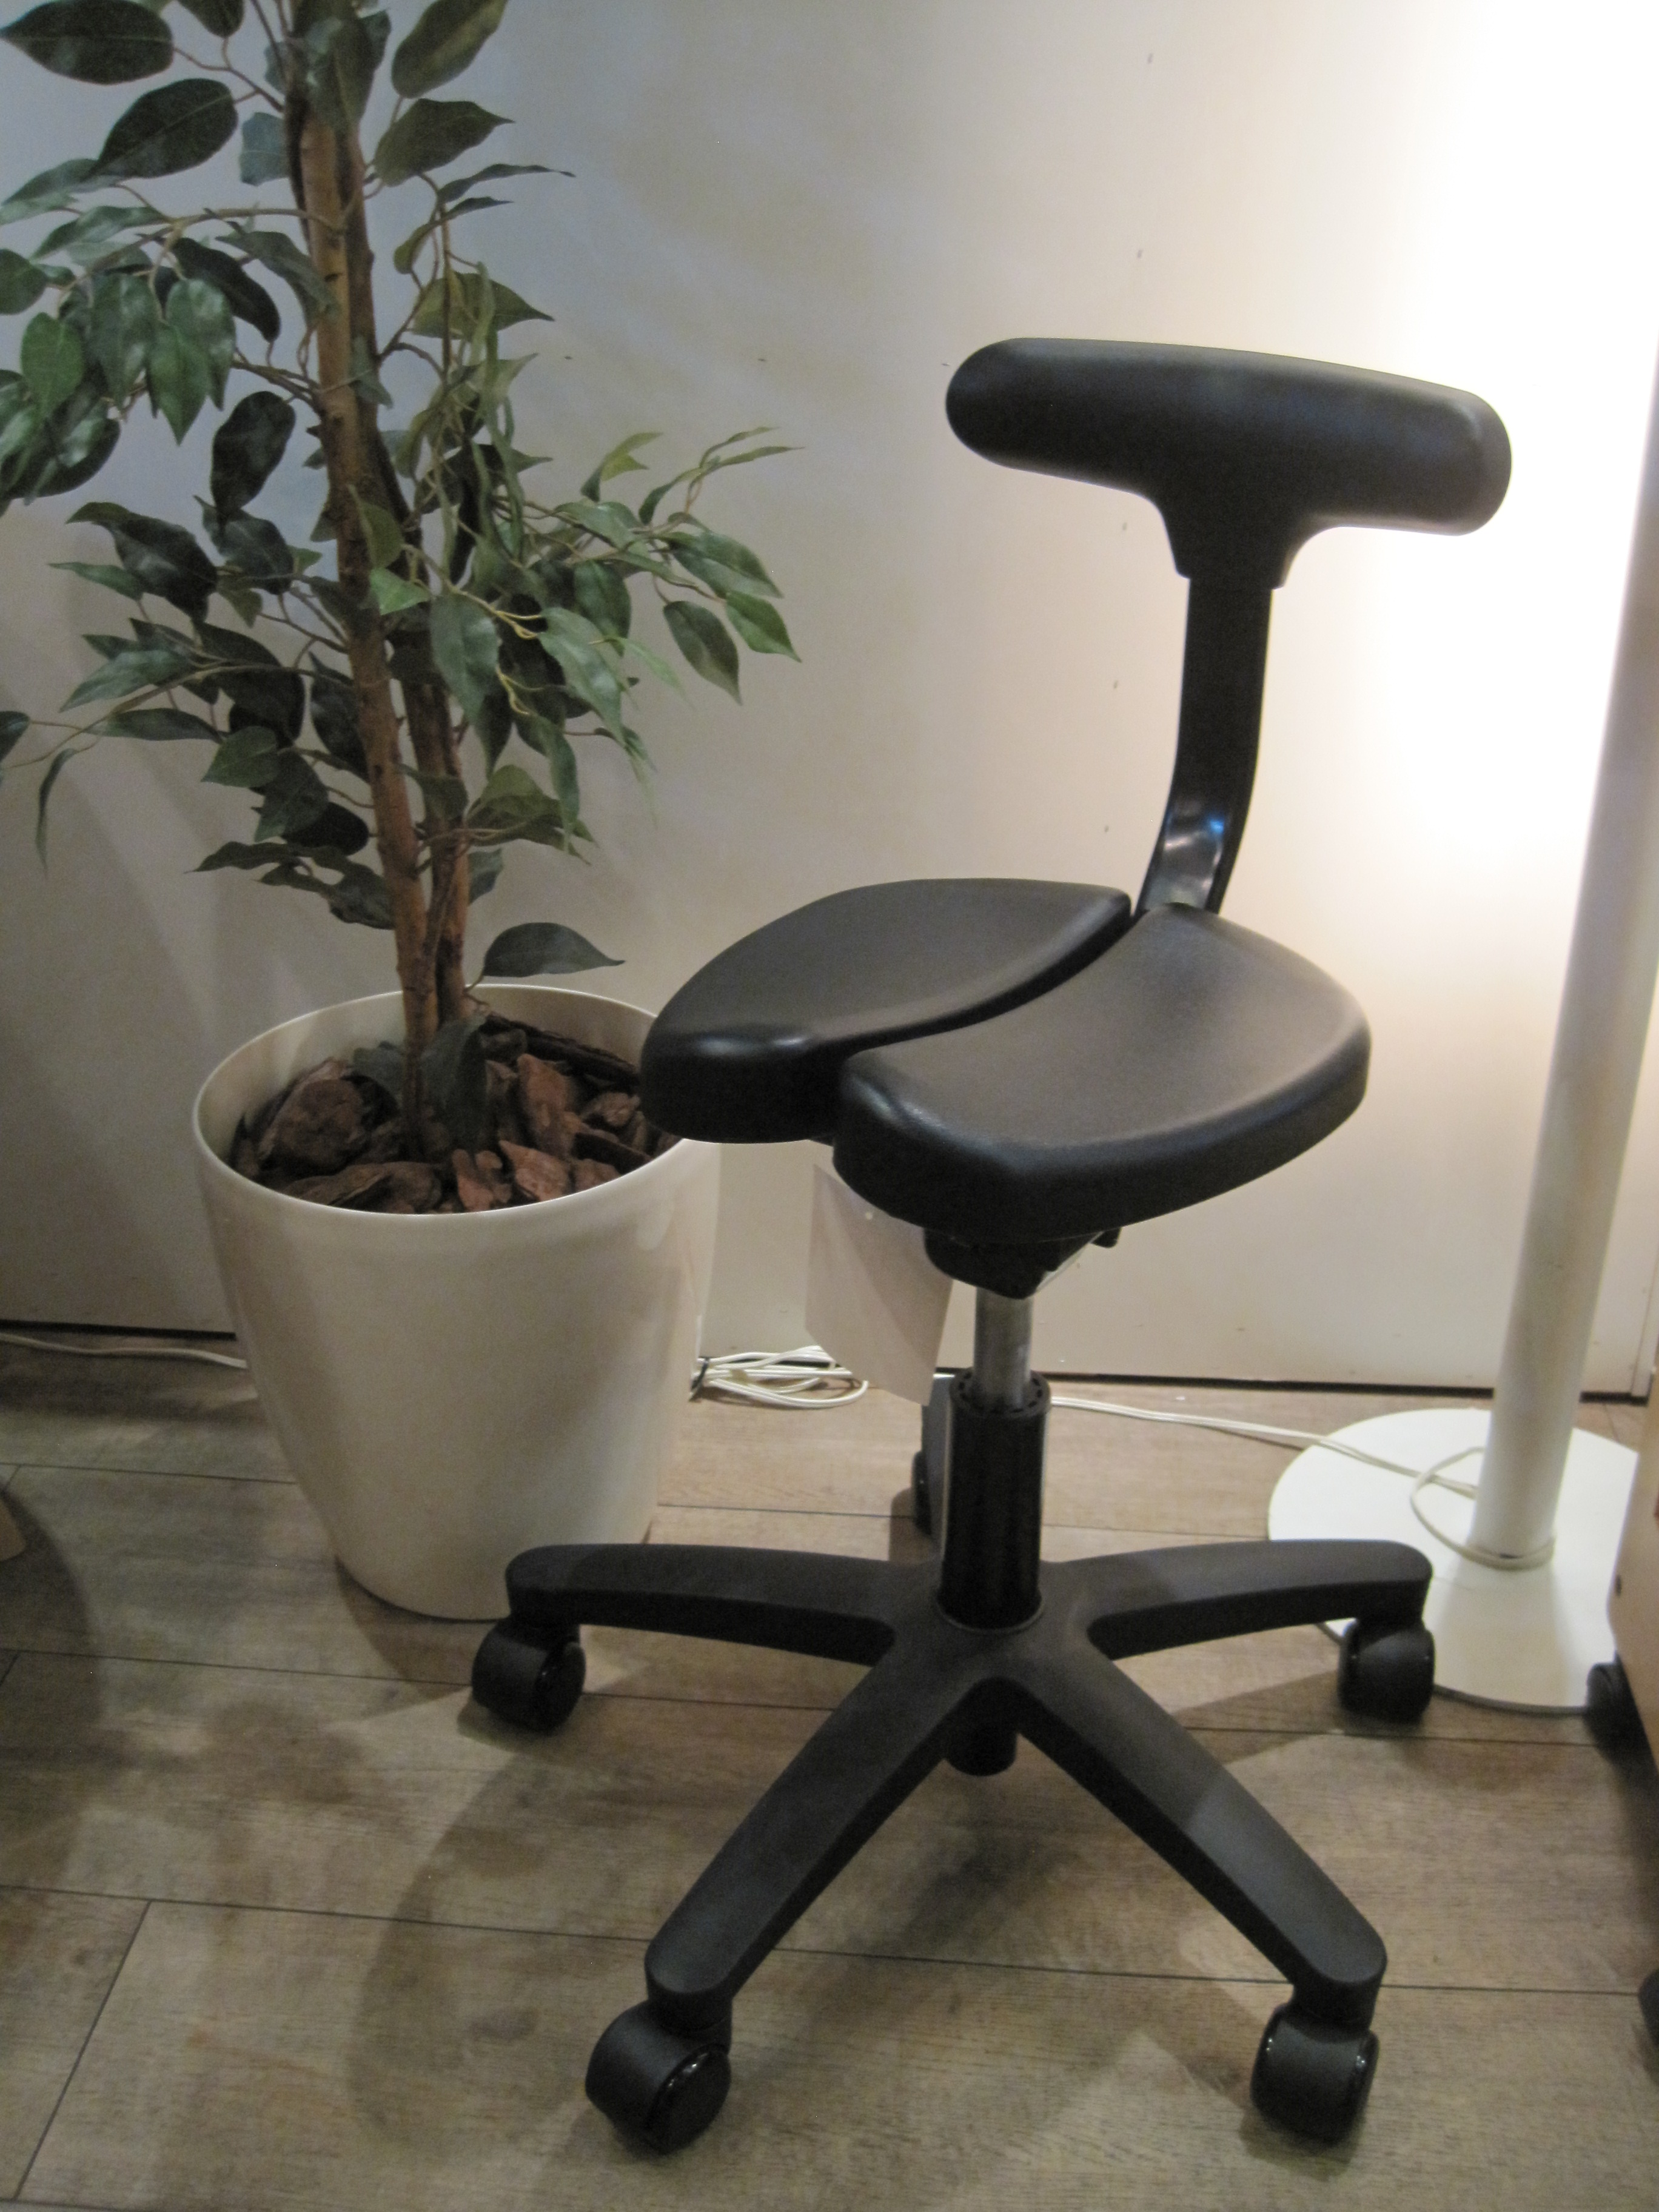 ayur chairアーユルチェアー 姿勢矯正チェア“オクトパス” 腰痛改善